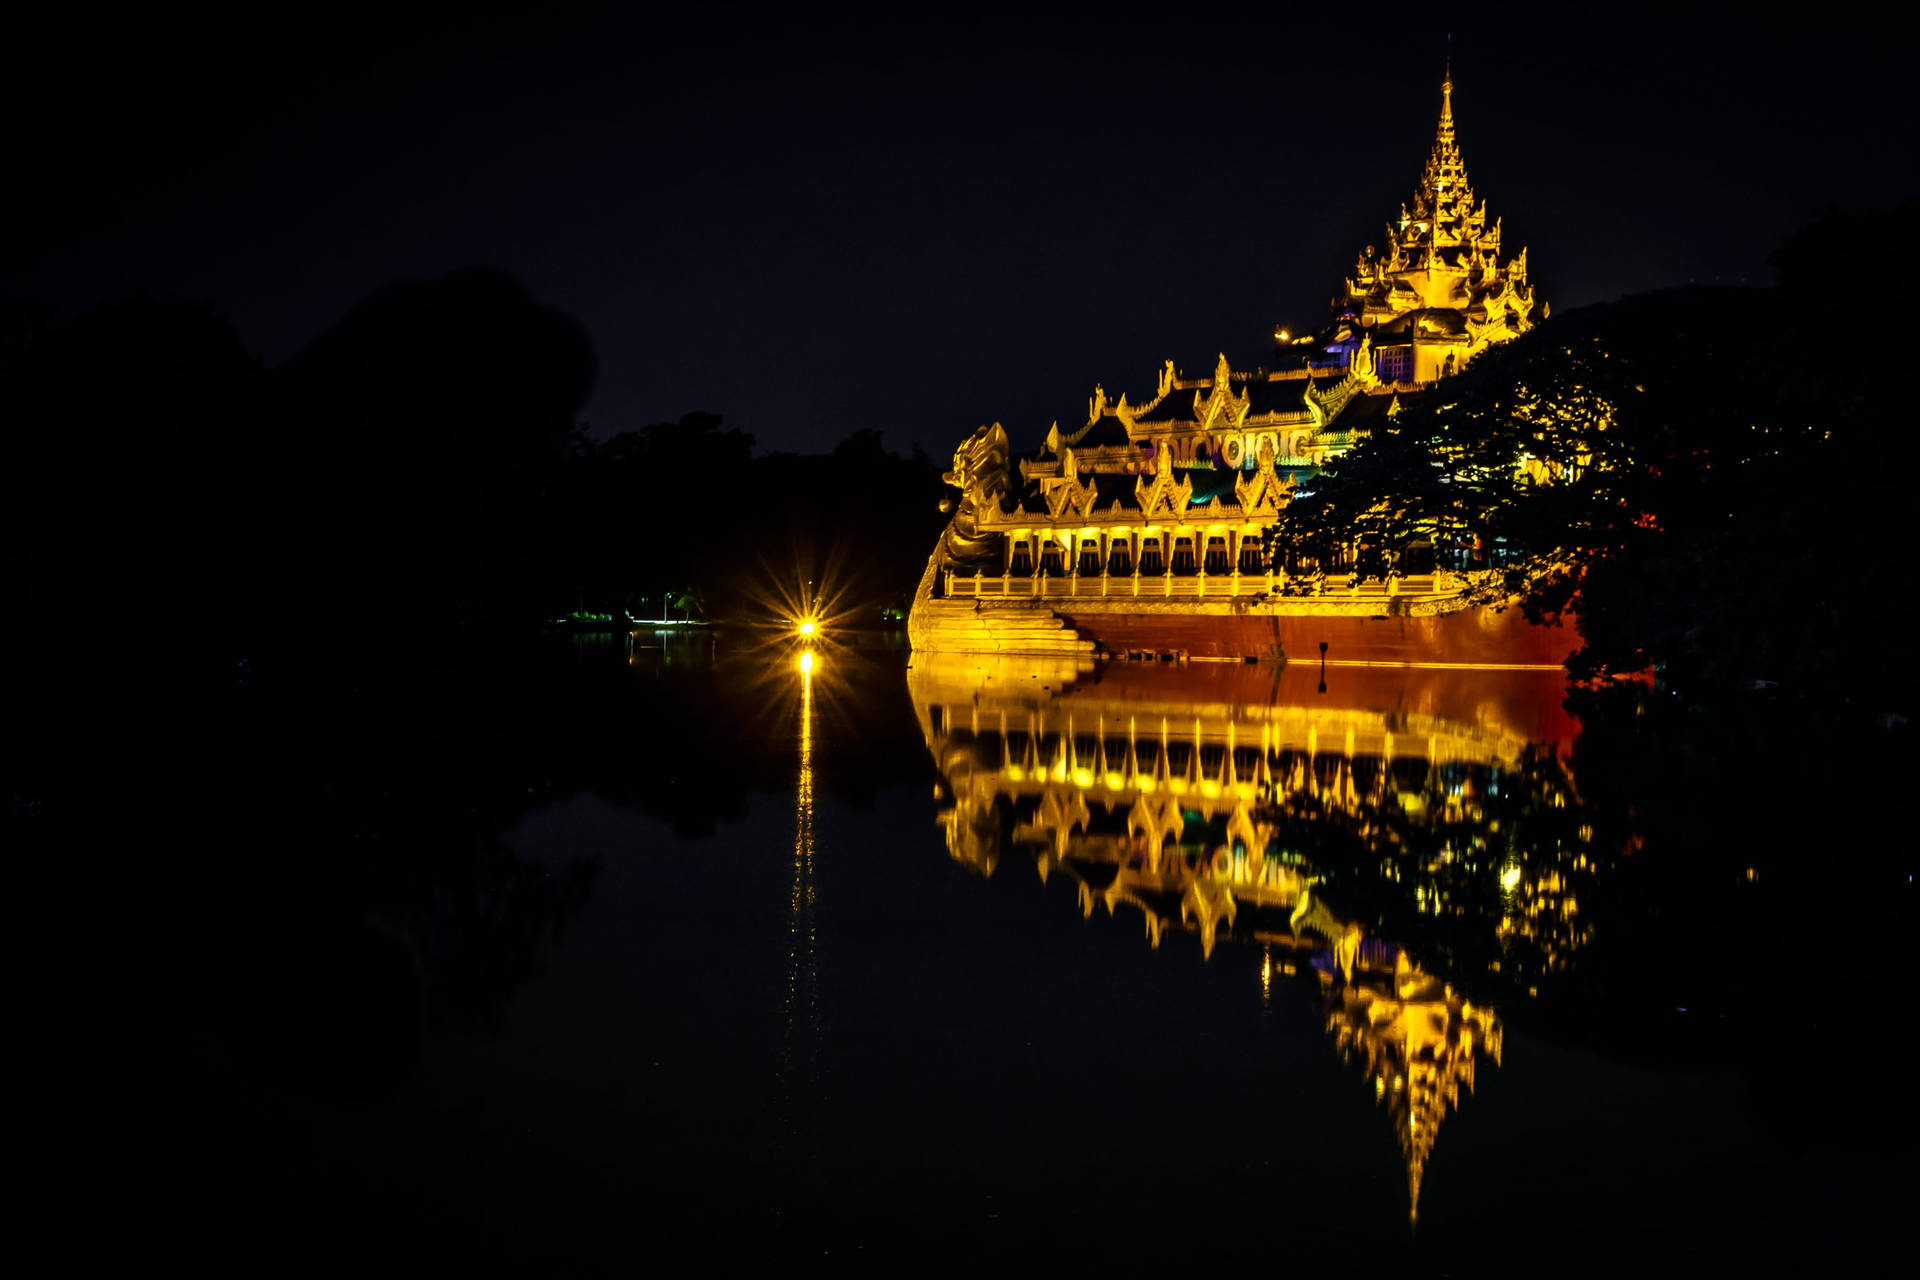 Yangon Karaweik Palace Evening Background